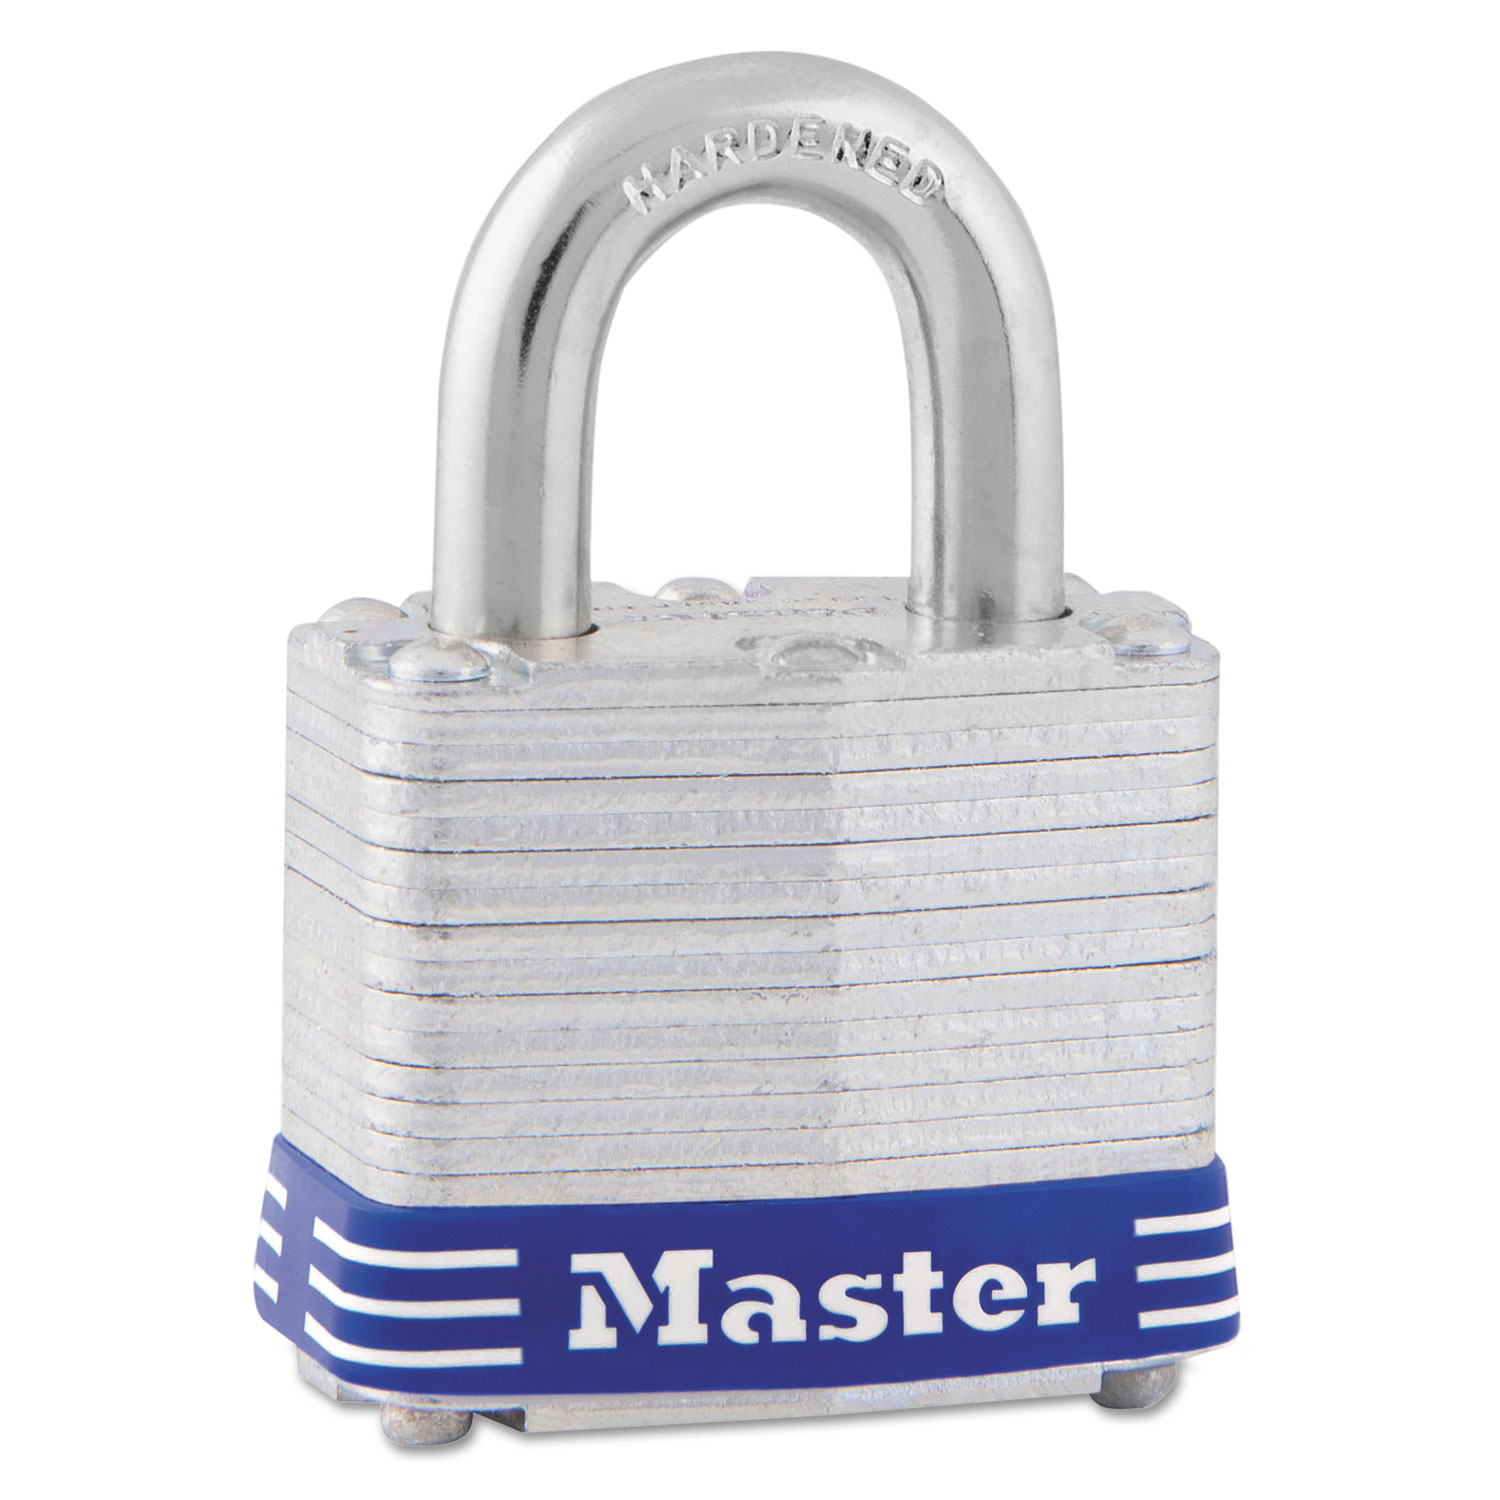  Master Lock 3D Four-Pin Tumbler Lock, Laminated Steel Body, 1 9/16 Wide, Silver/Blue, Two Keys (MLK3D) 